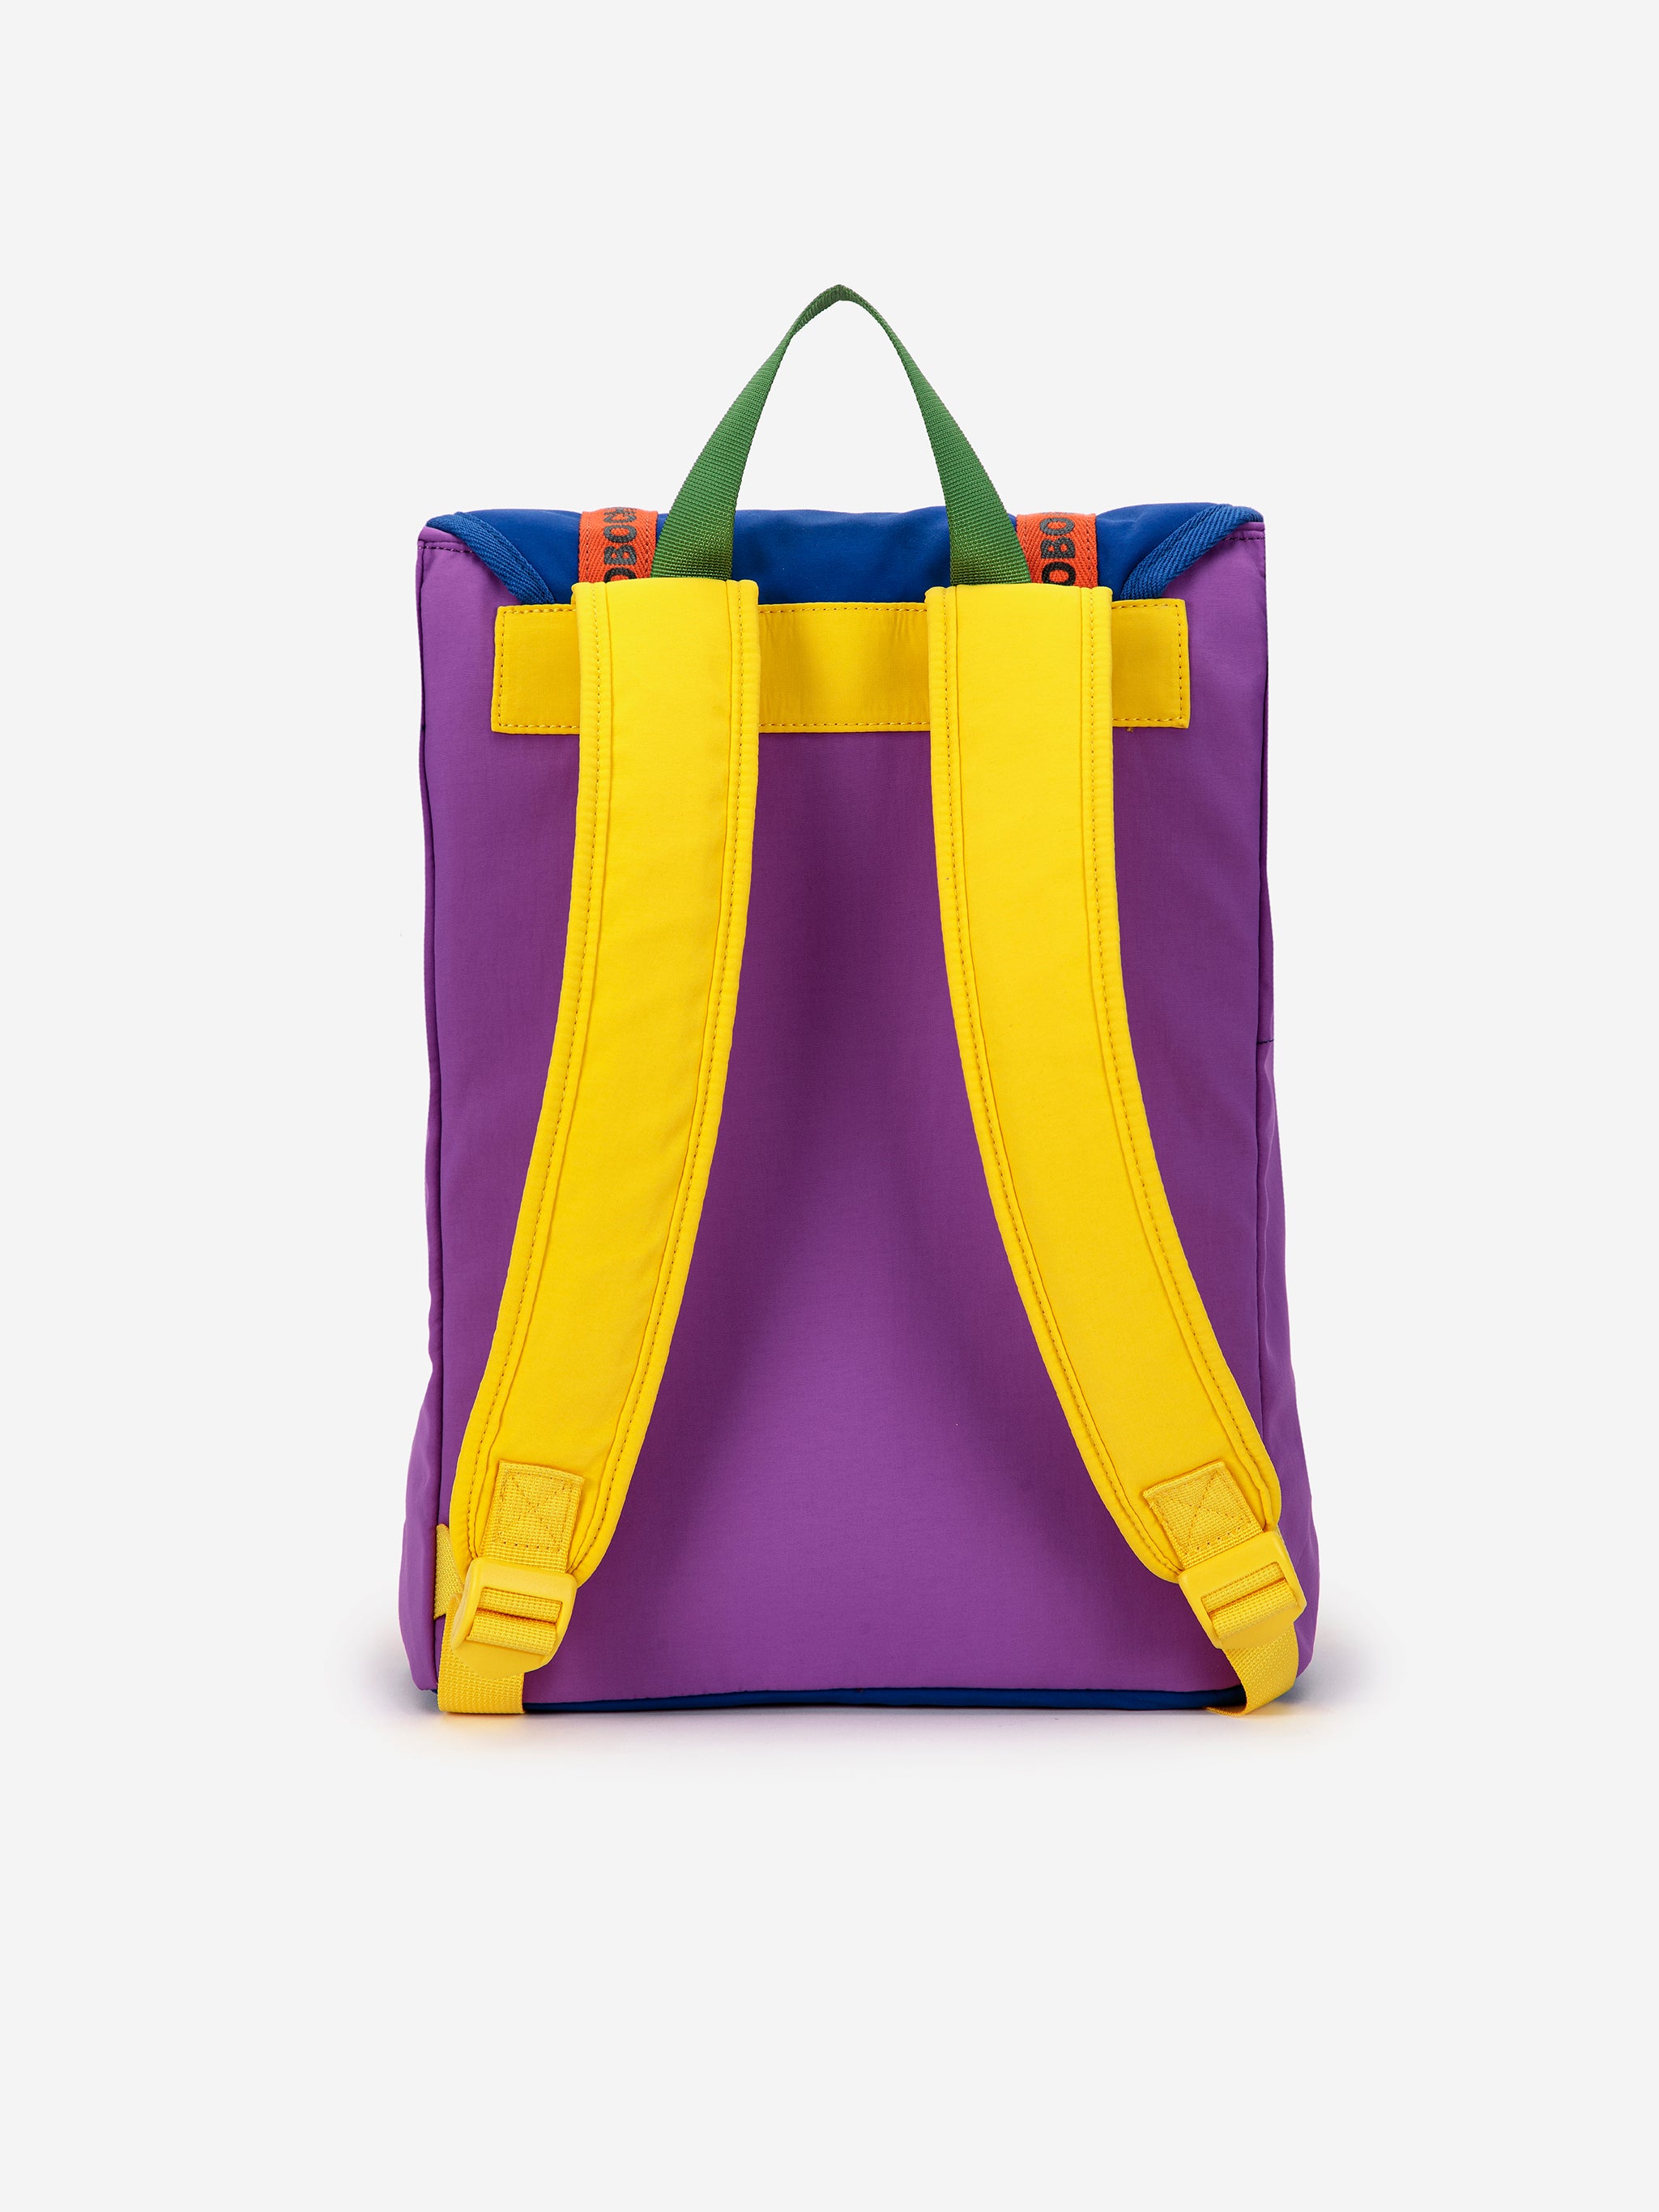 Bobo Choses  Color block backpack / unisex